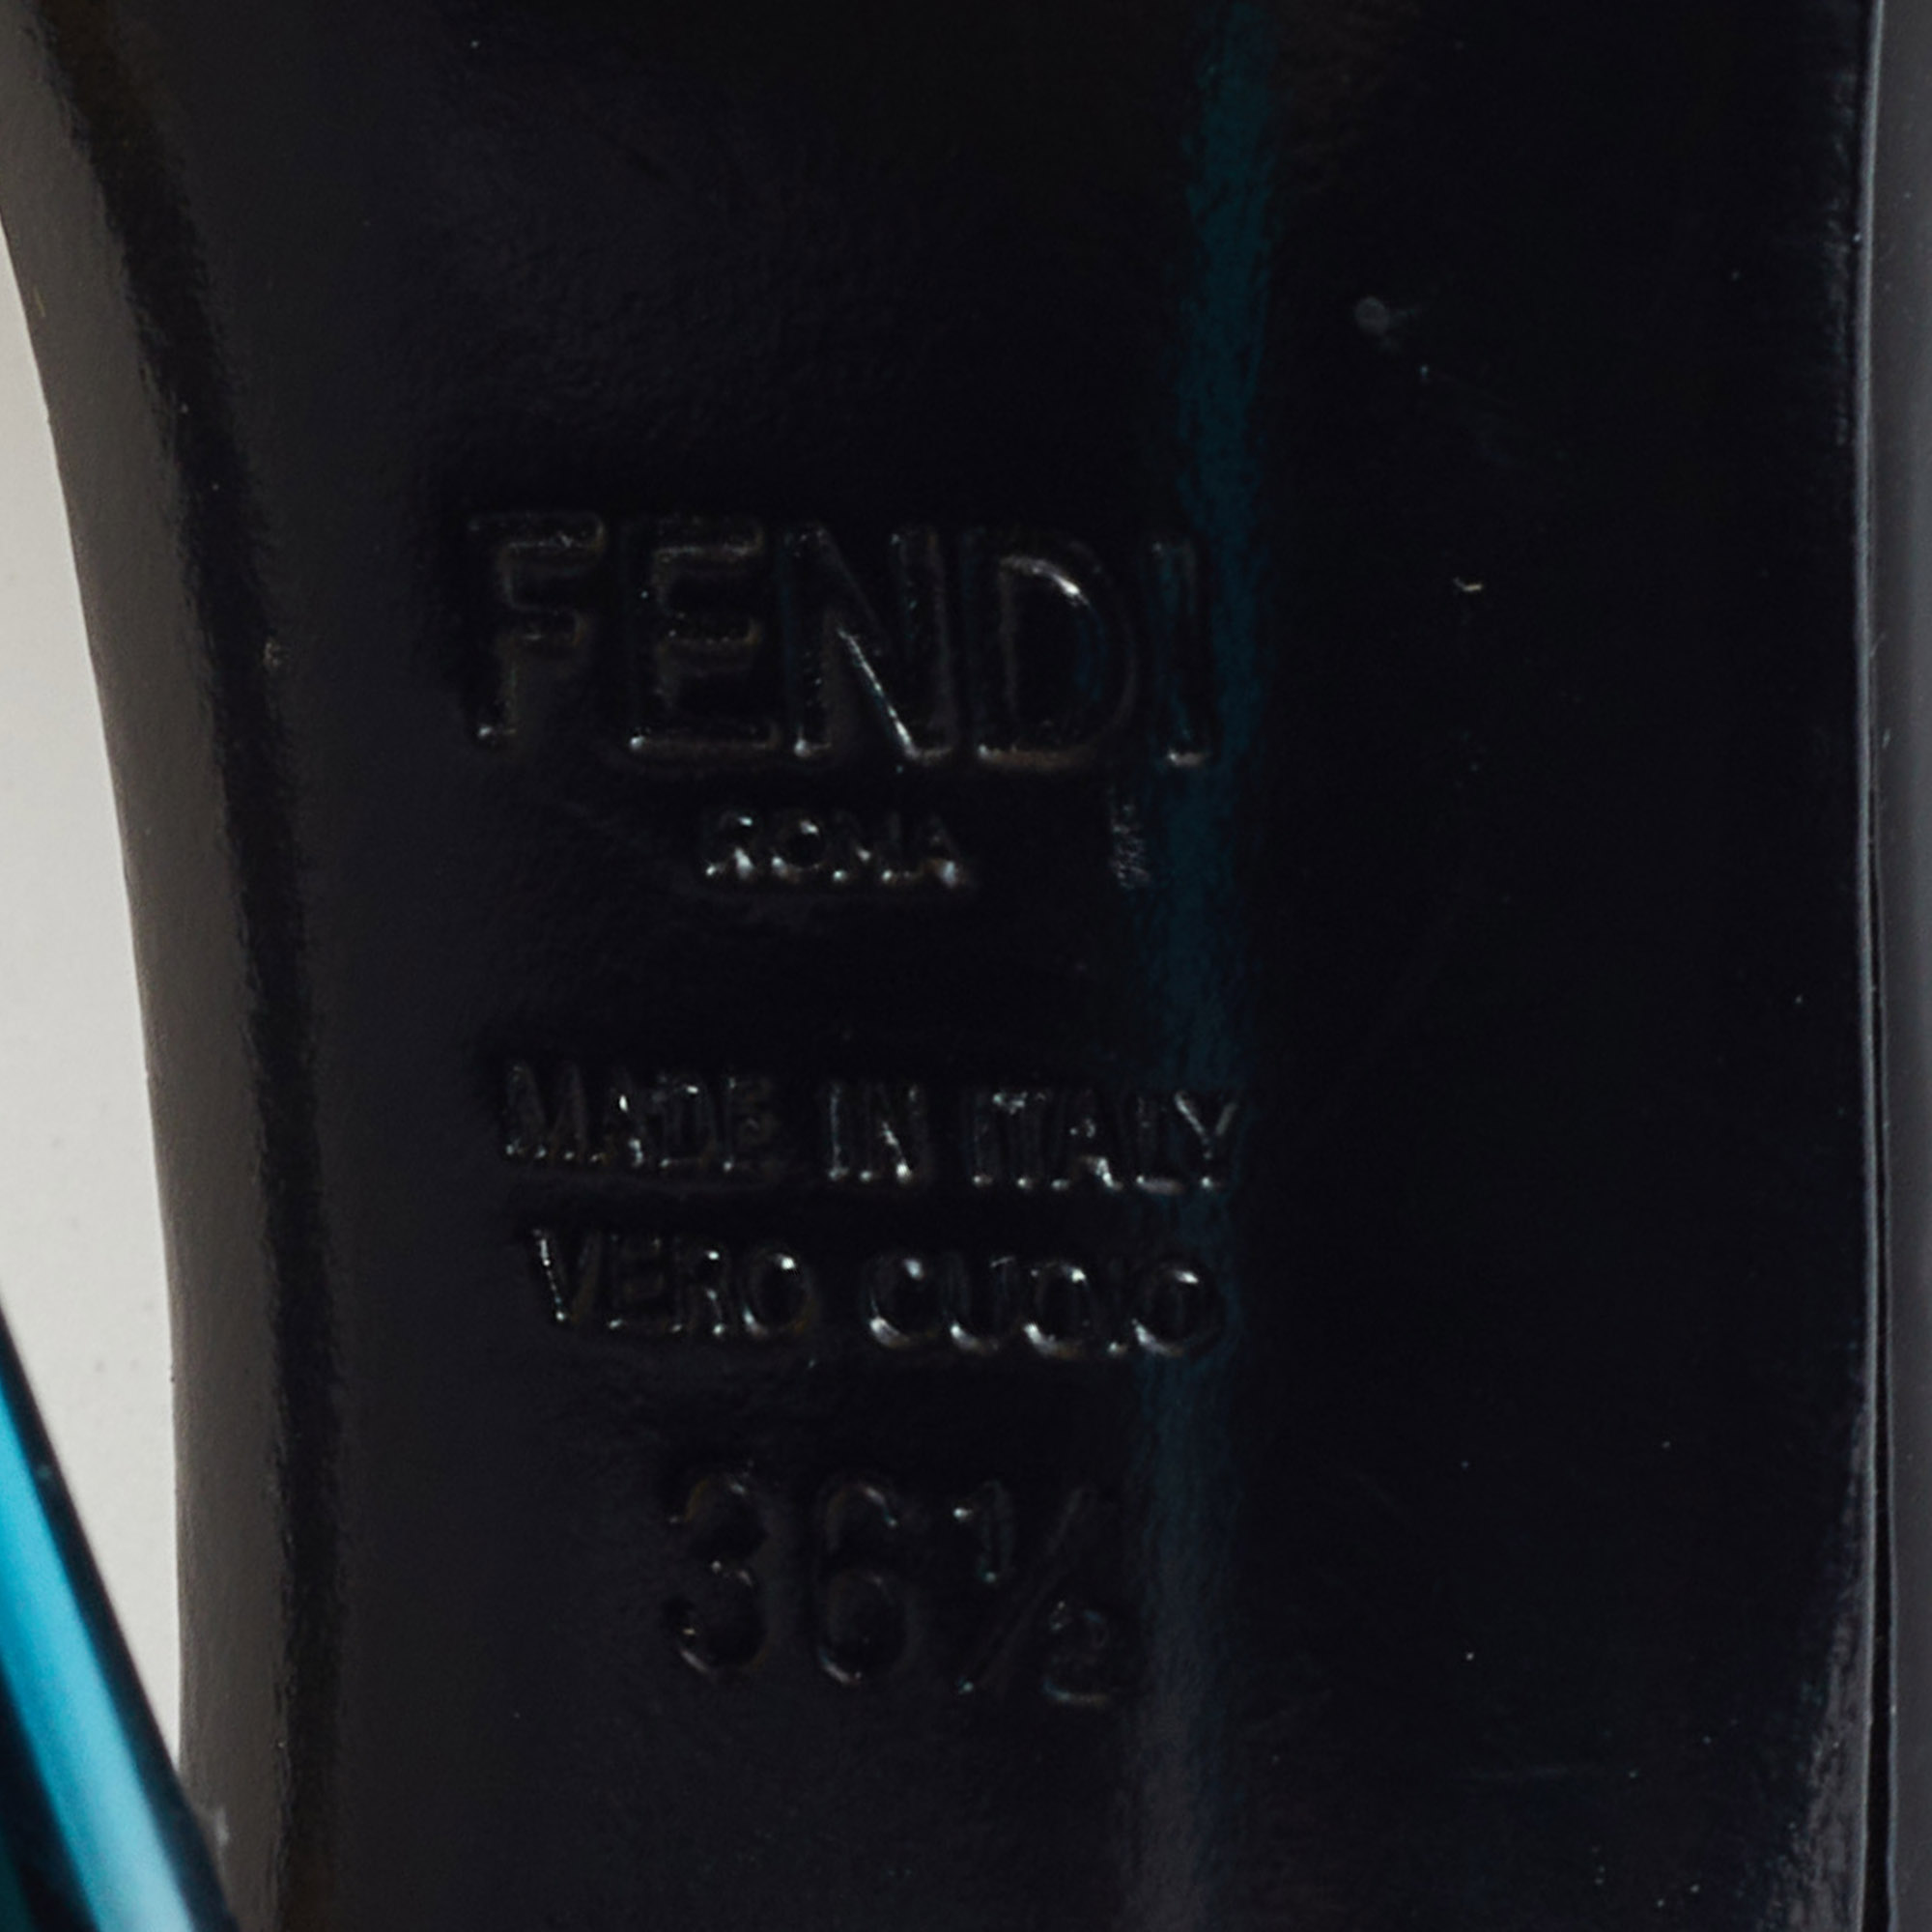 Fendi Black Patent Leather Ankle Strap Sandals Size 36.5